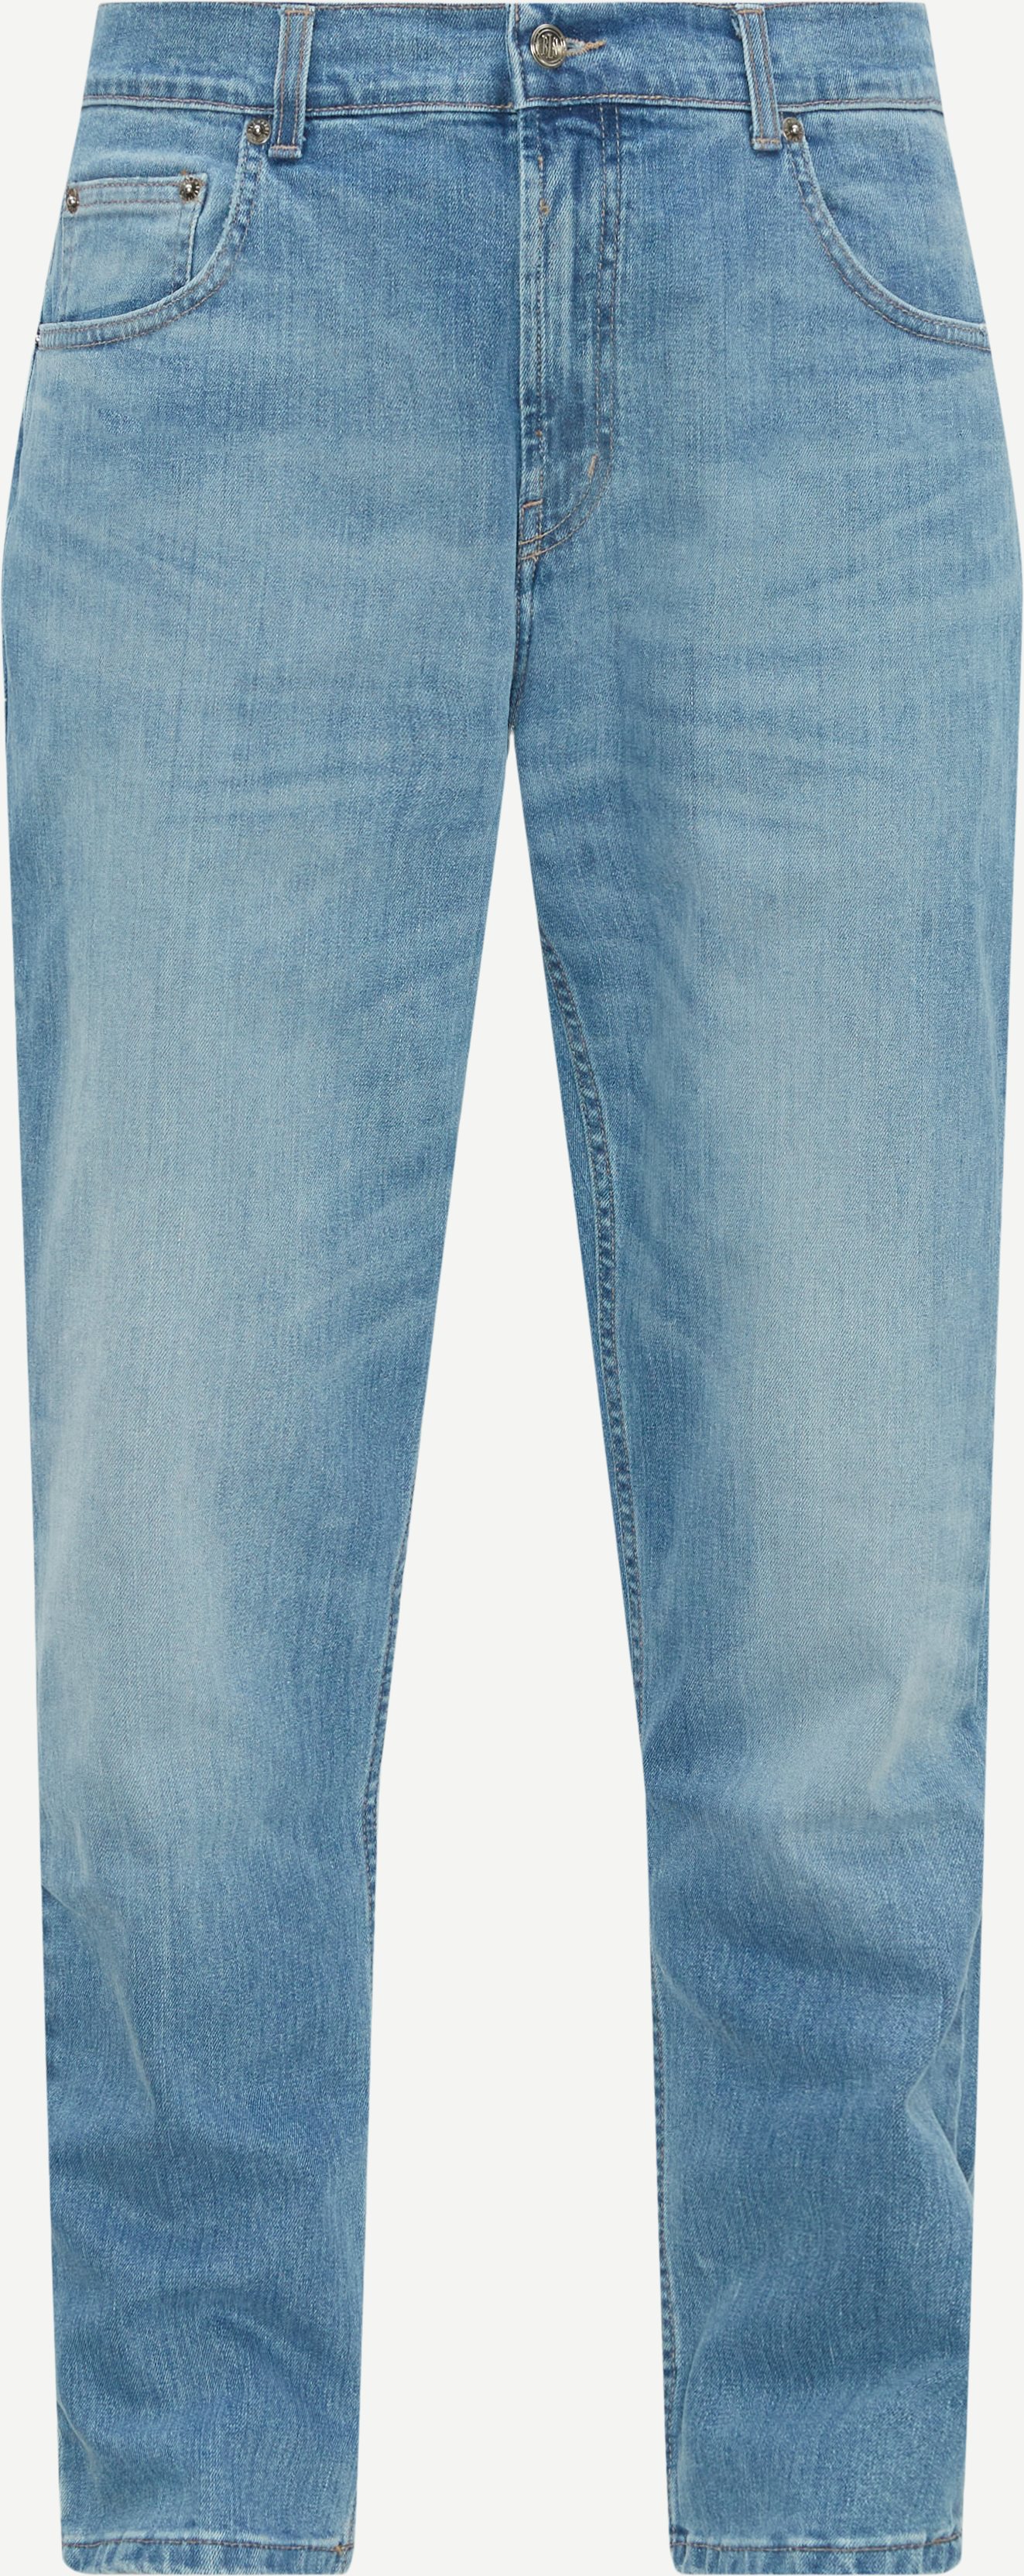 BLS Jeans BALBOA JEANS 202308021 Blue